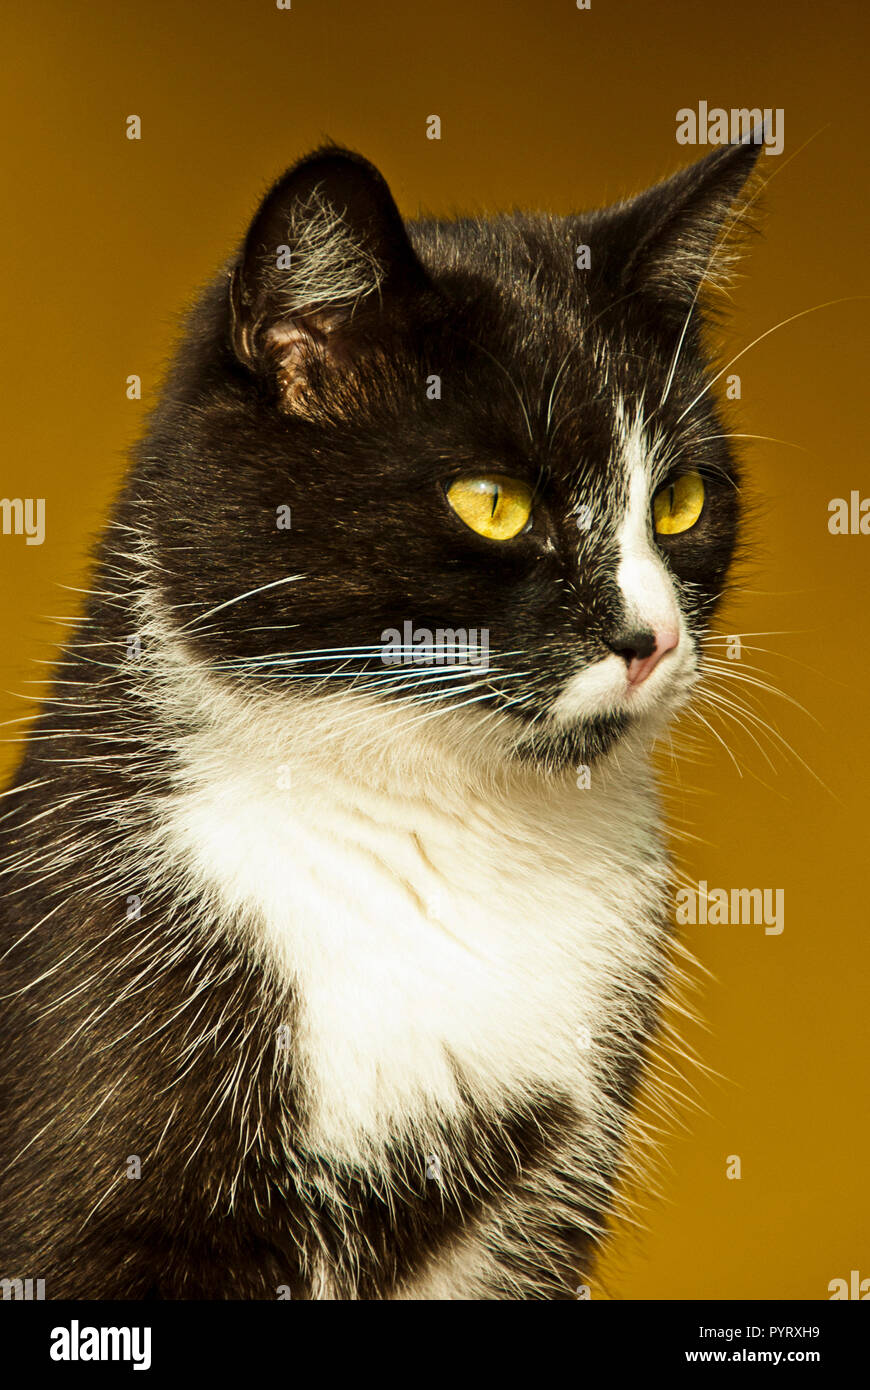 portrait of a domestic Bicolor or Tuxedo cat outdoor Stock Photo